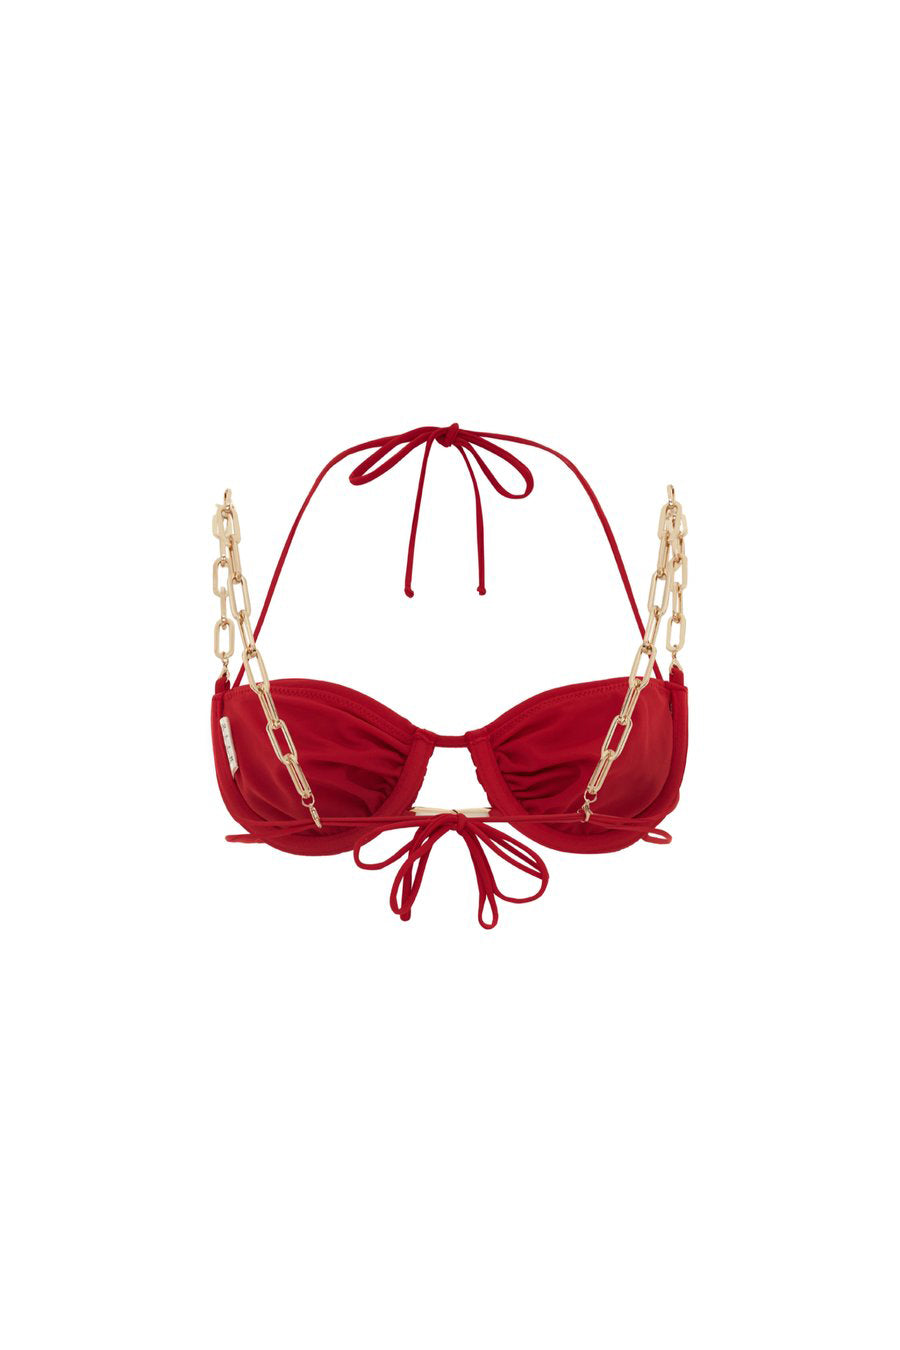 Belly Dance Bikini Top- Red - Annie's Ibiza